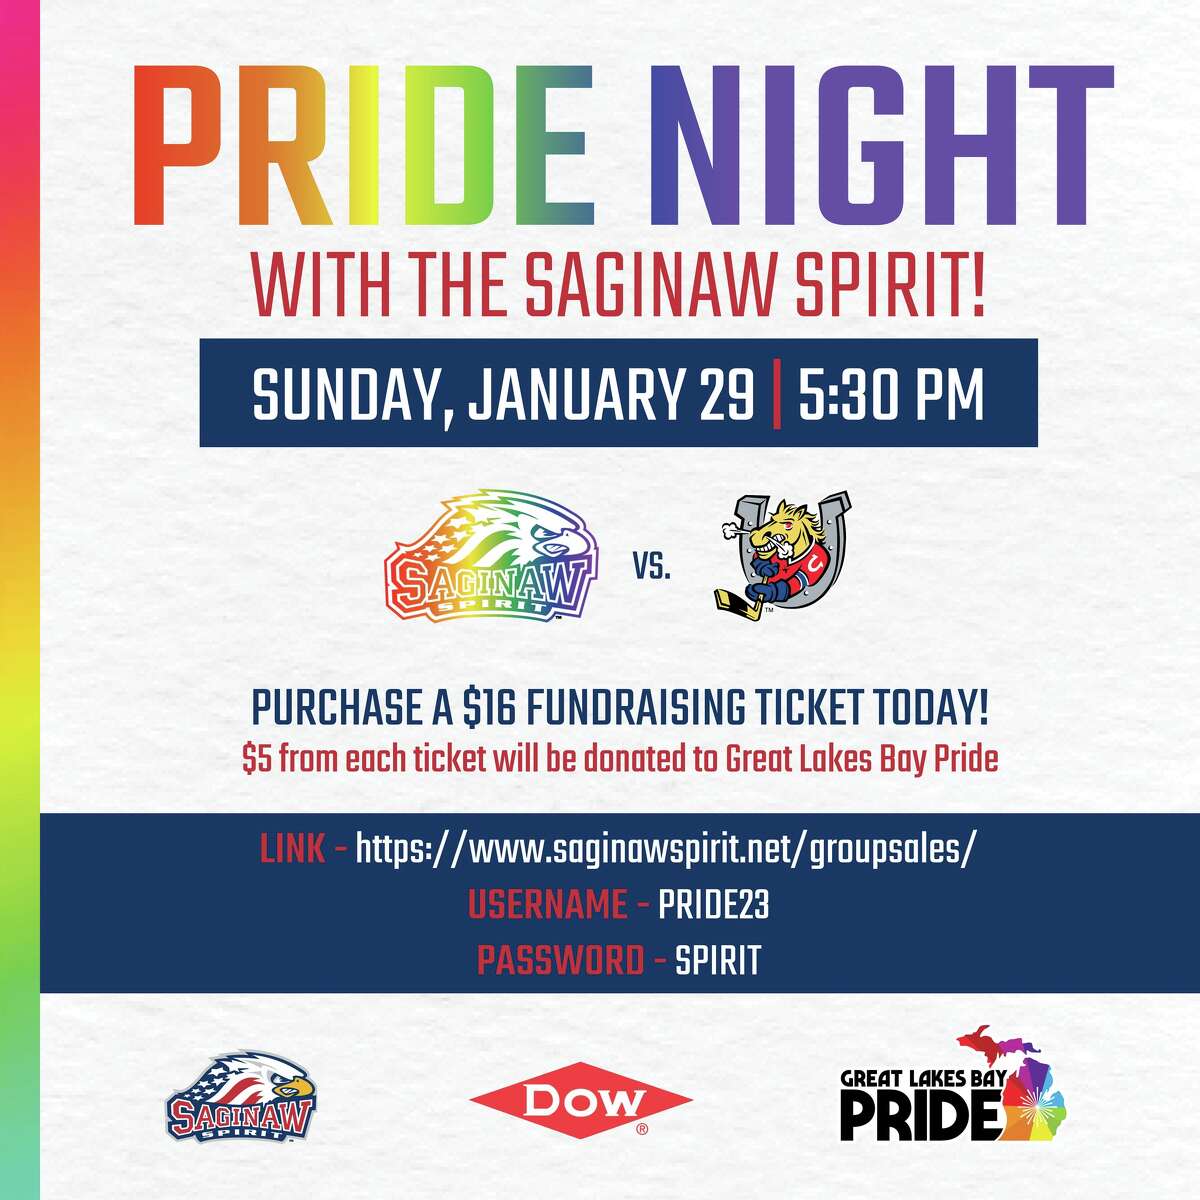 Pride night flyer.